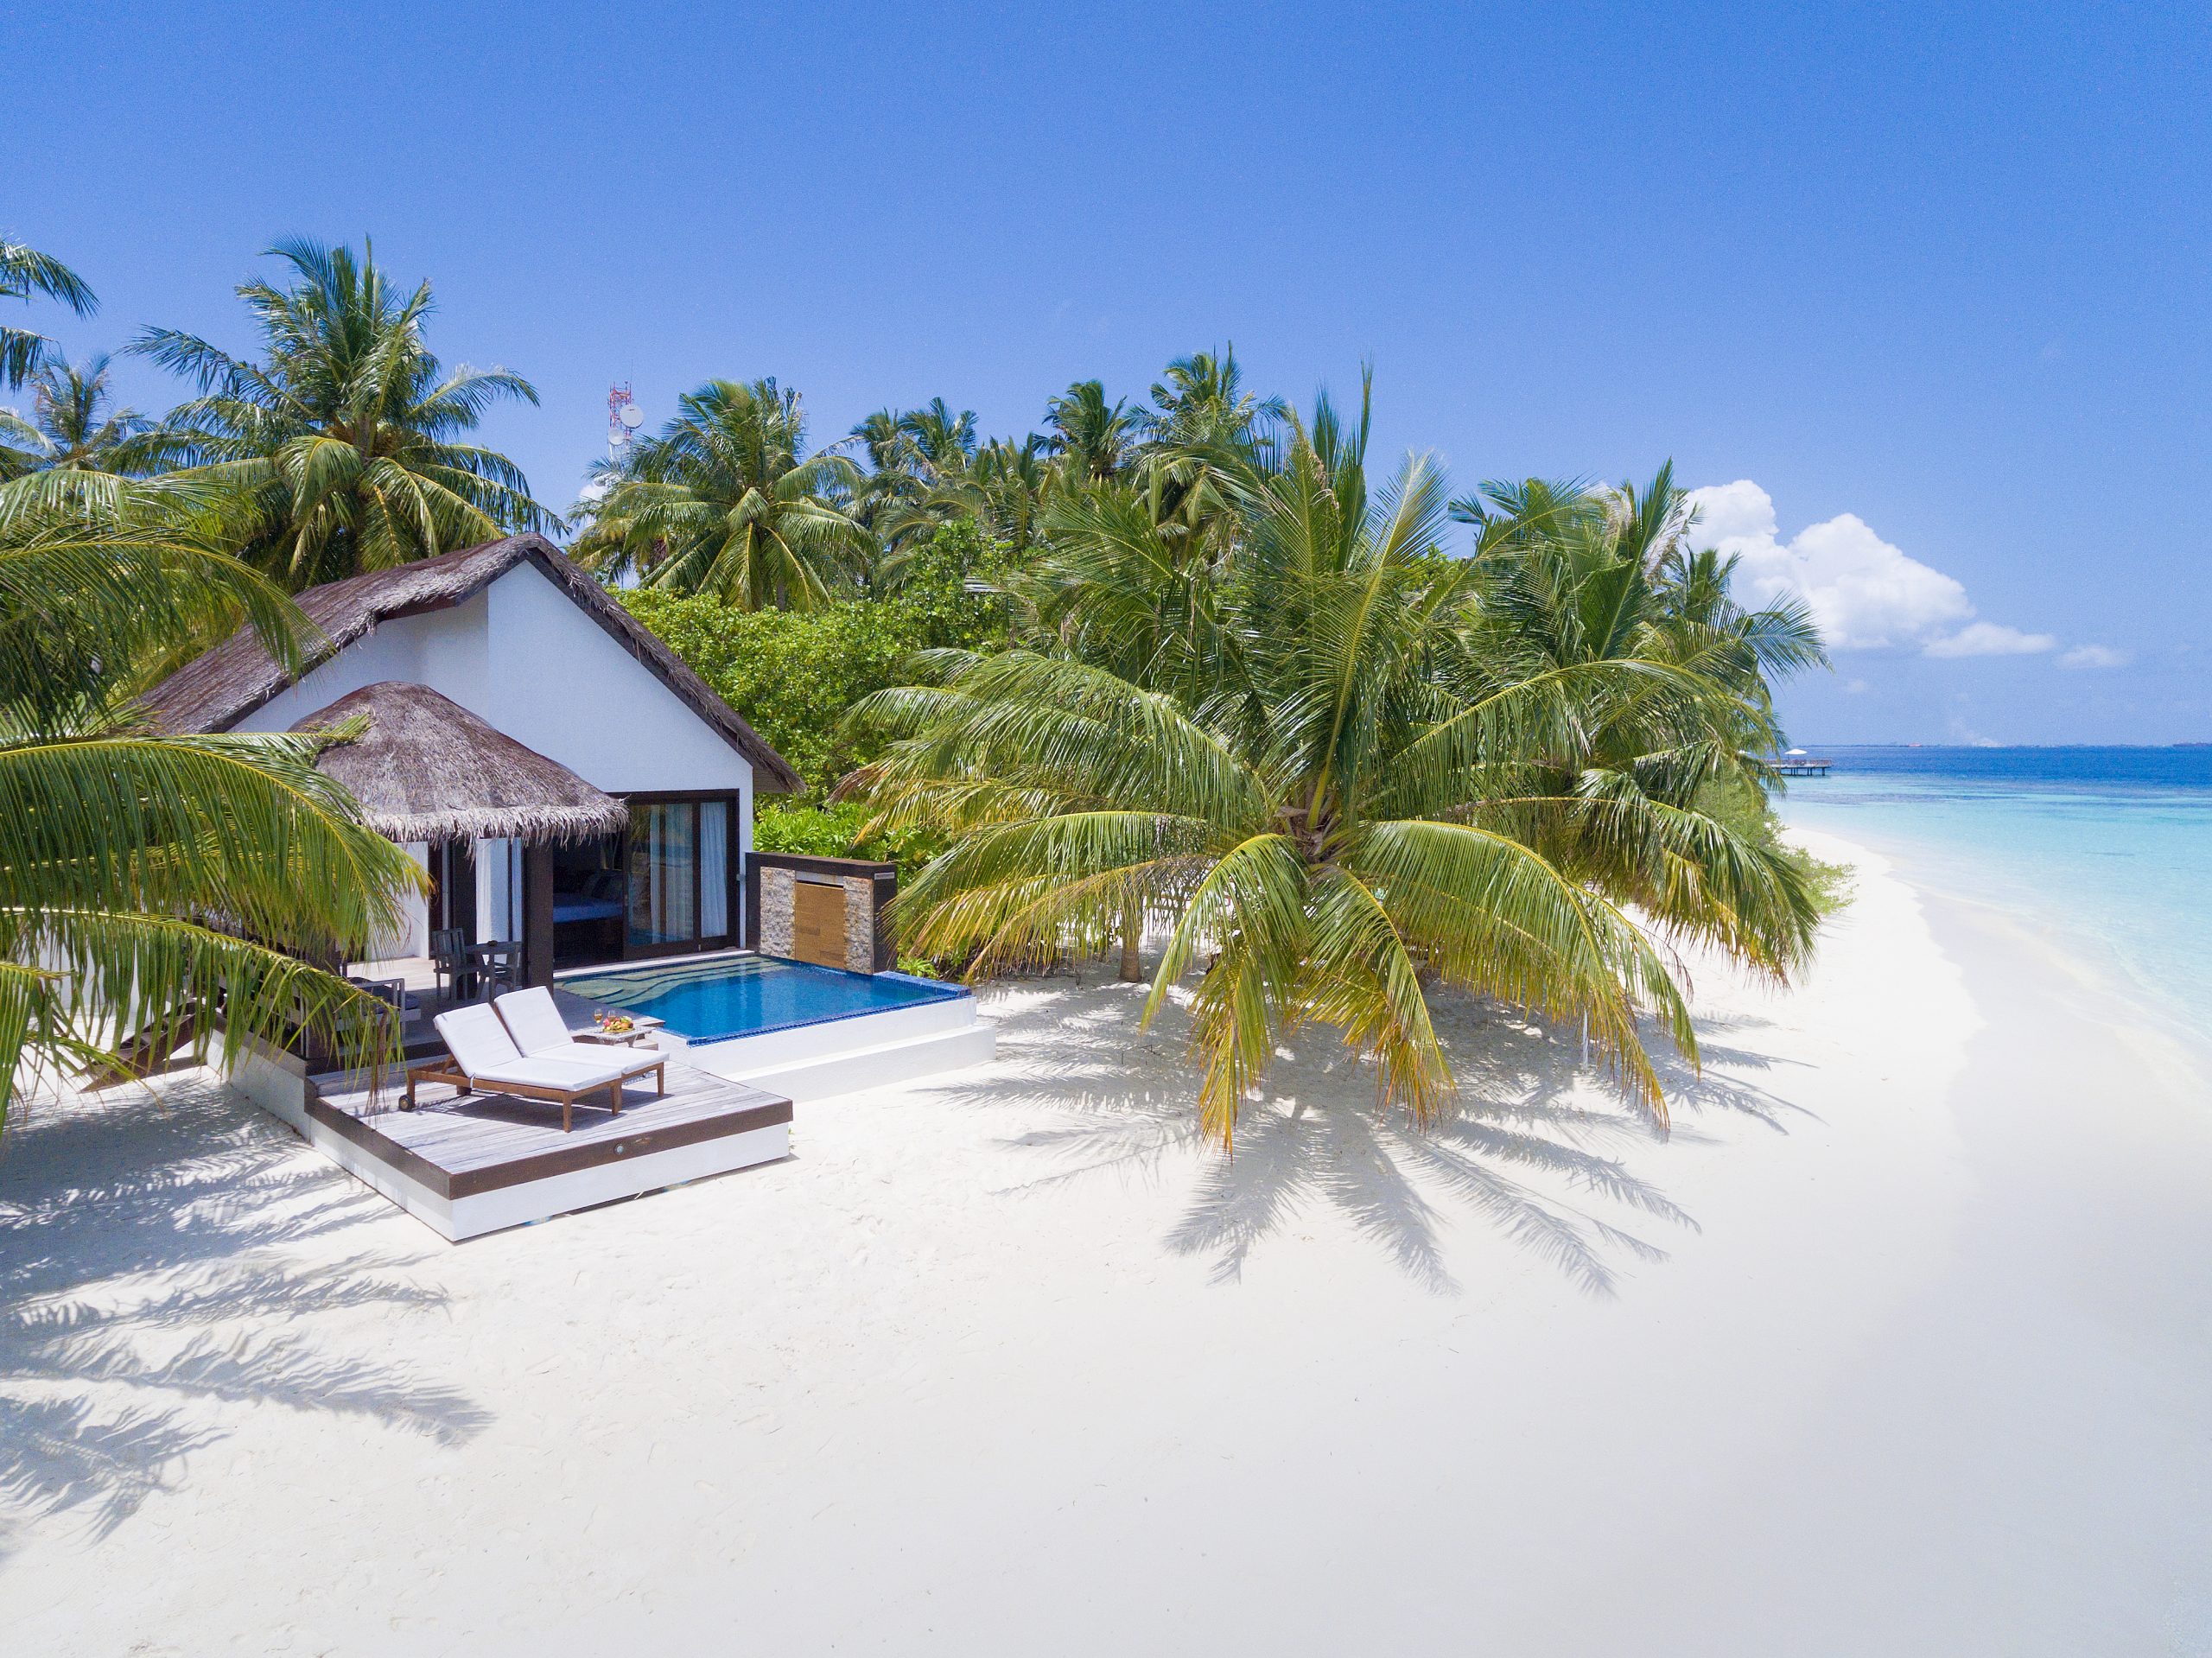 Bandos Sea Resort villa on the beach in Maldives